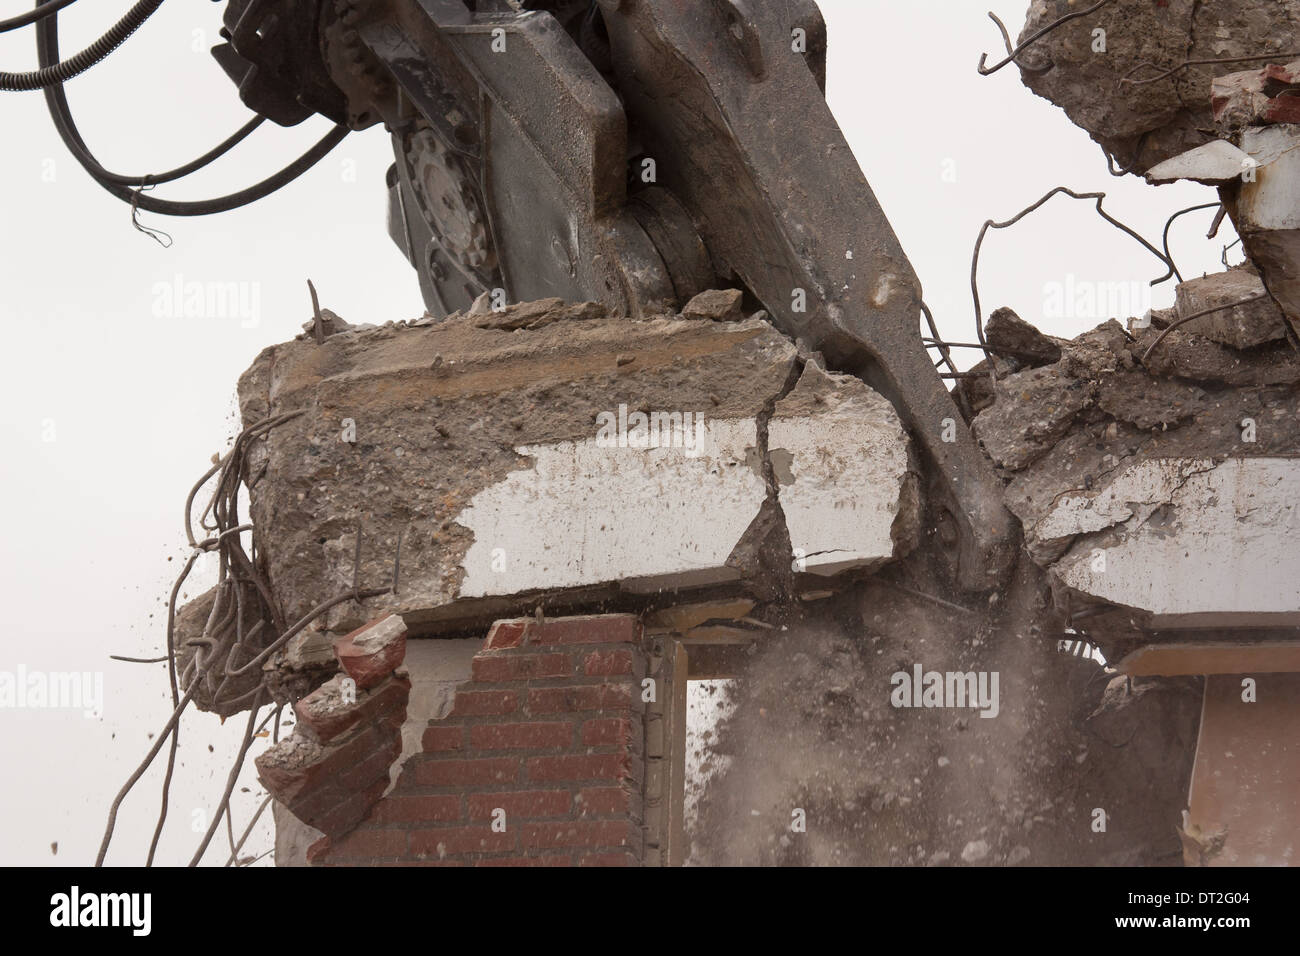 A crane is demolishing a block of flats Stock Photo